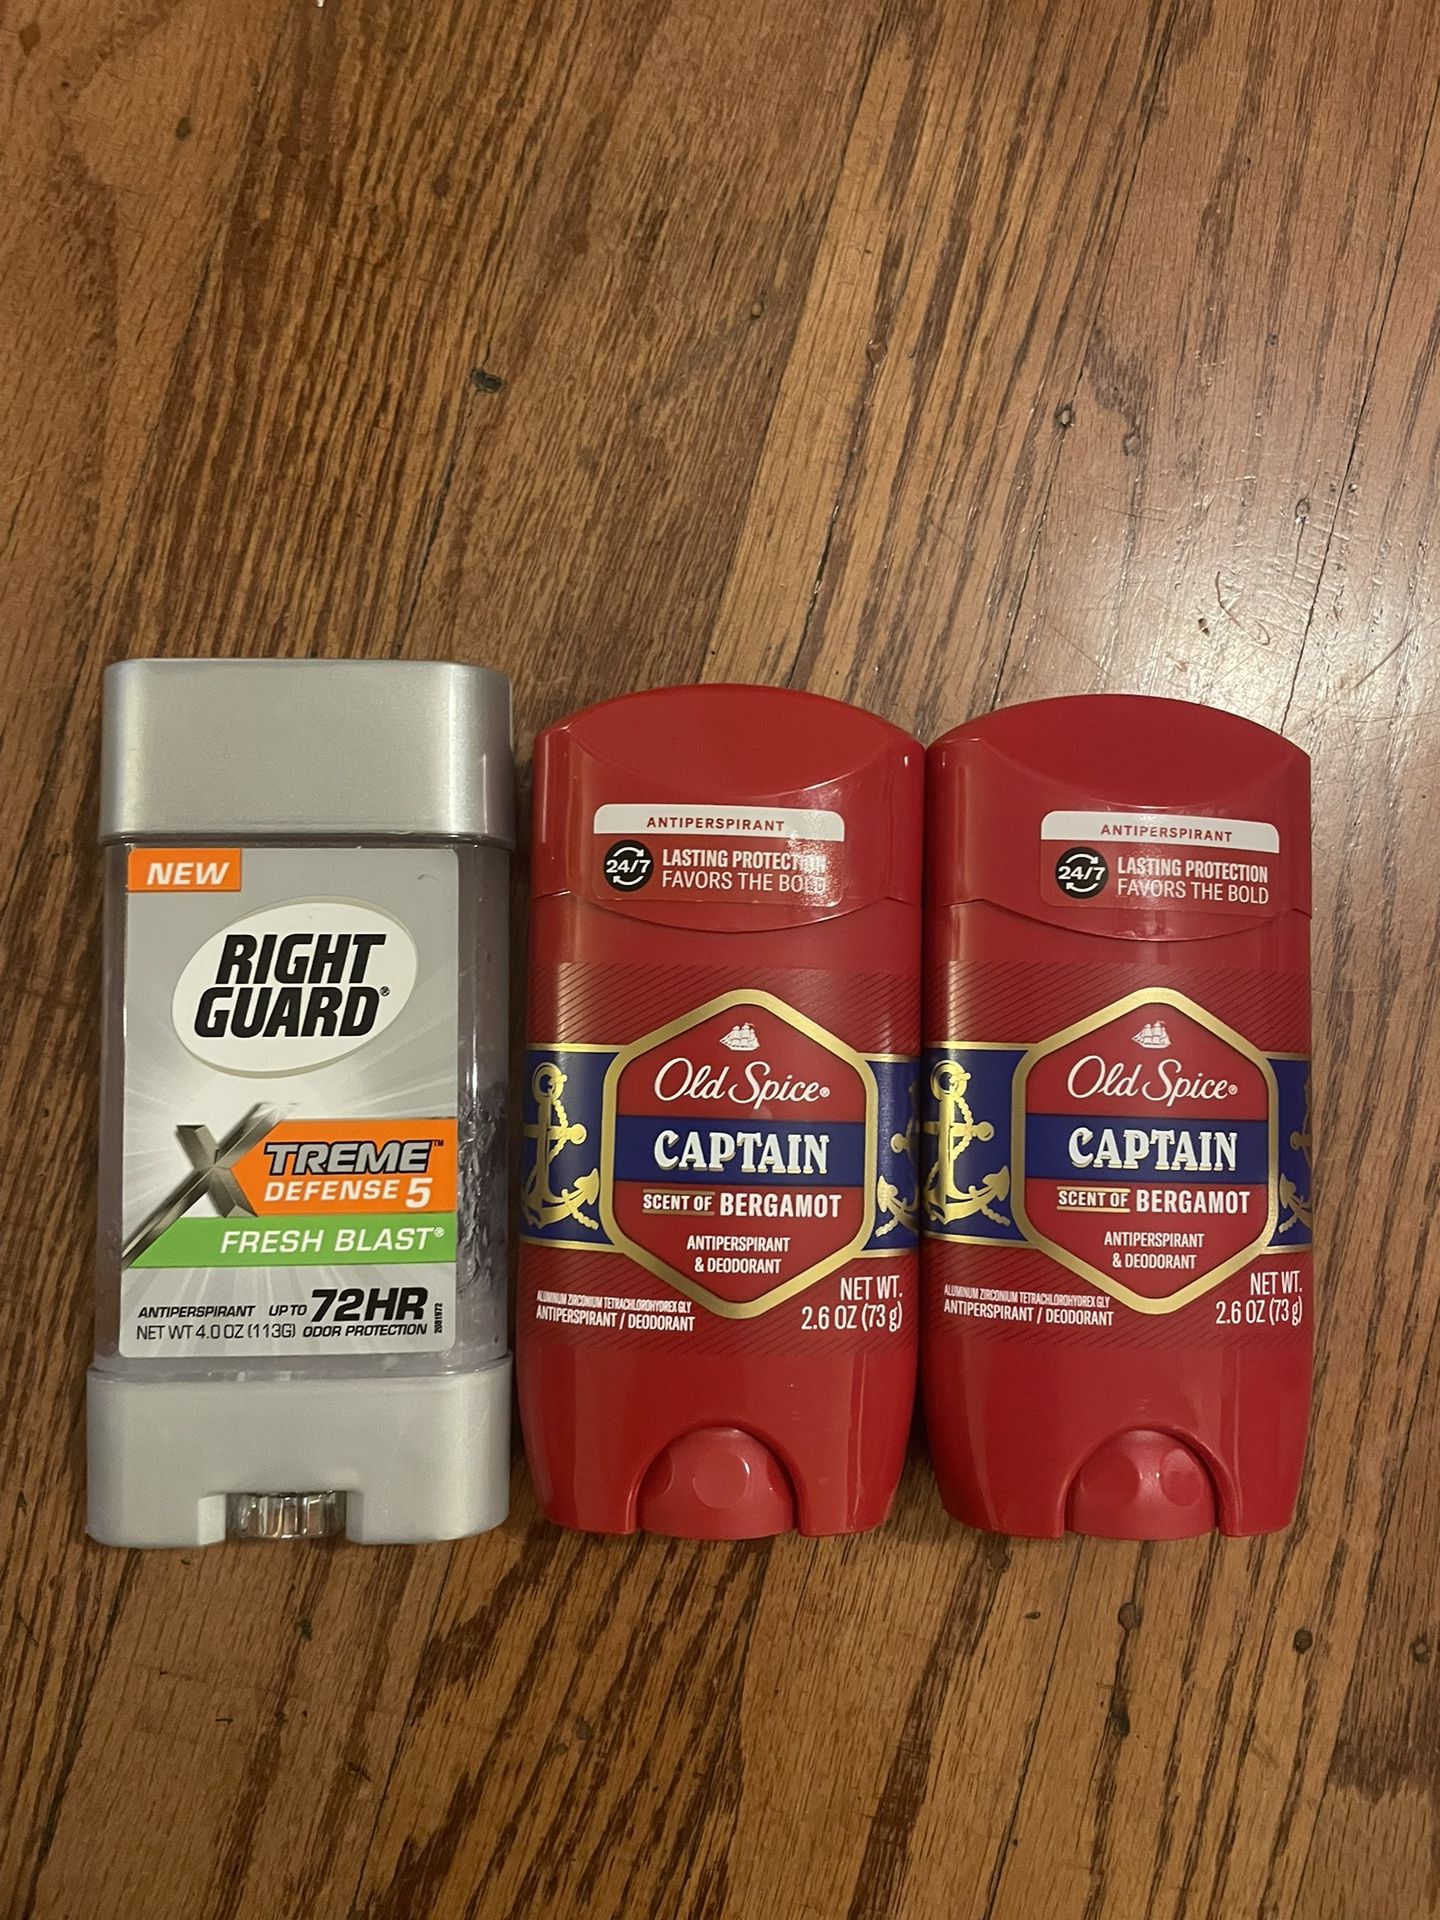 Old Spice & Right Guard Deodorant Bundle